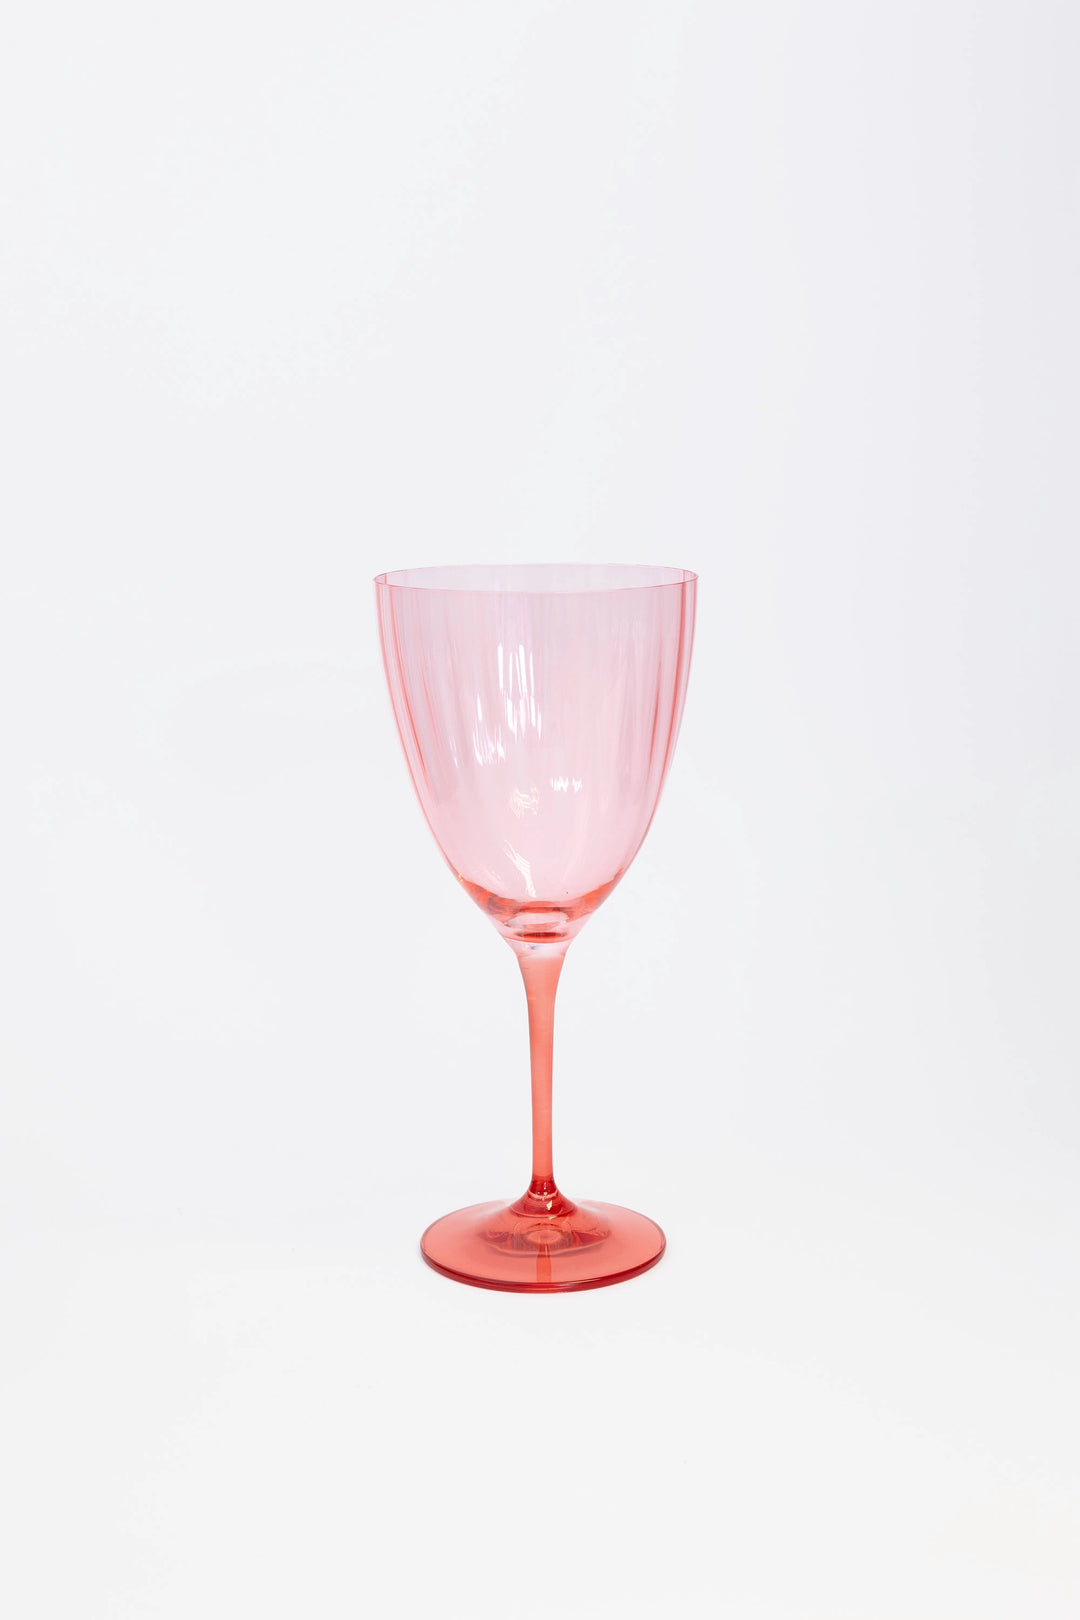 Anna + Nina Garden Pink Wine Glass